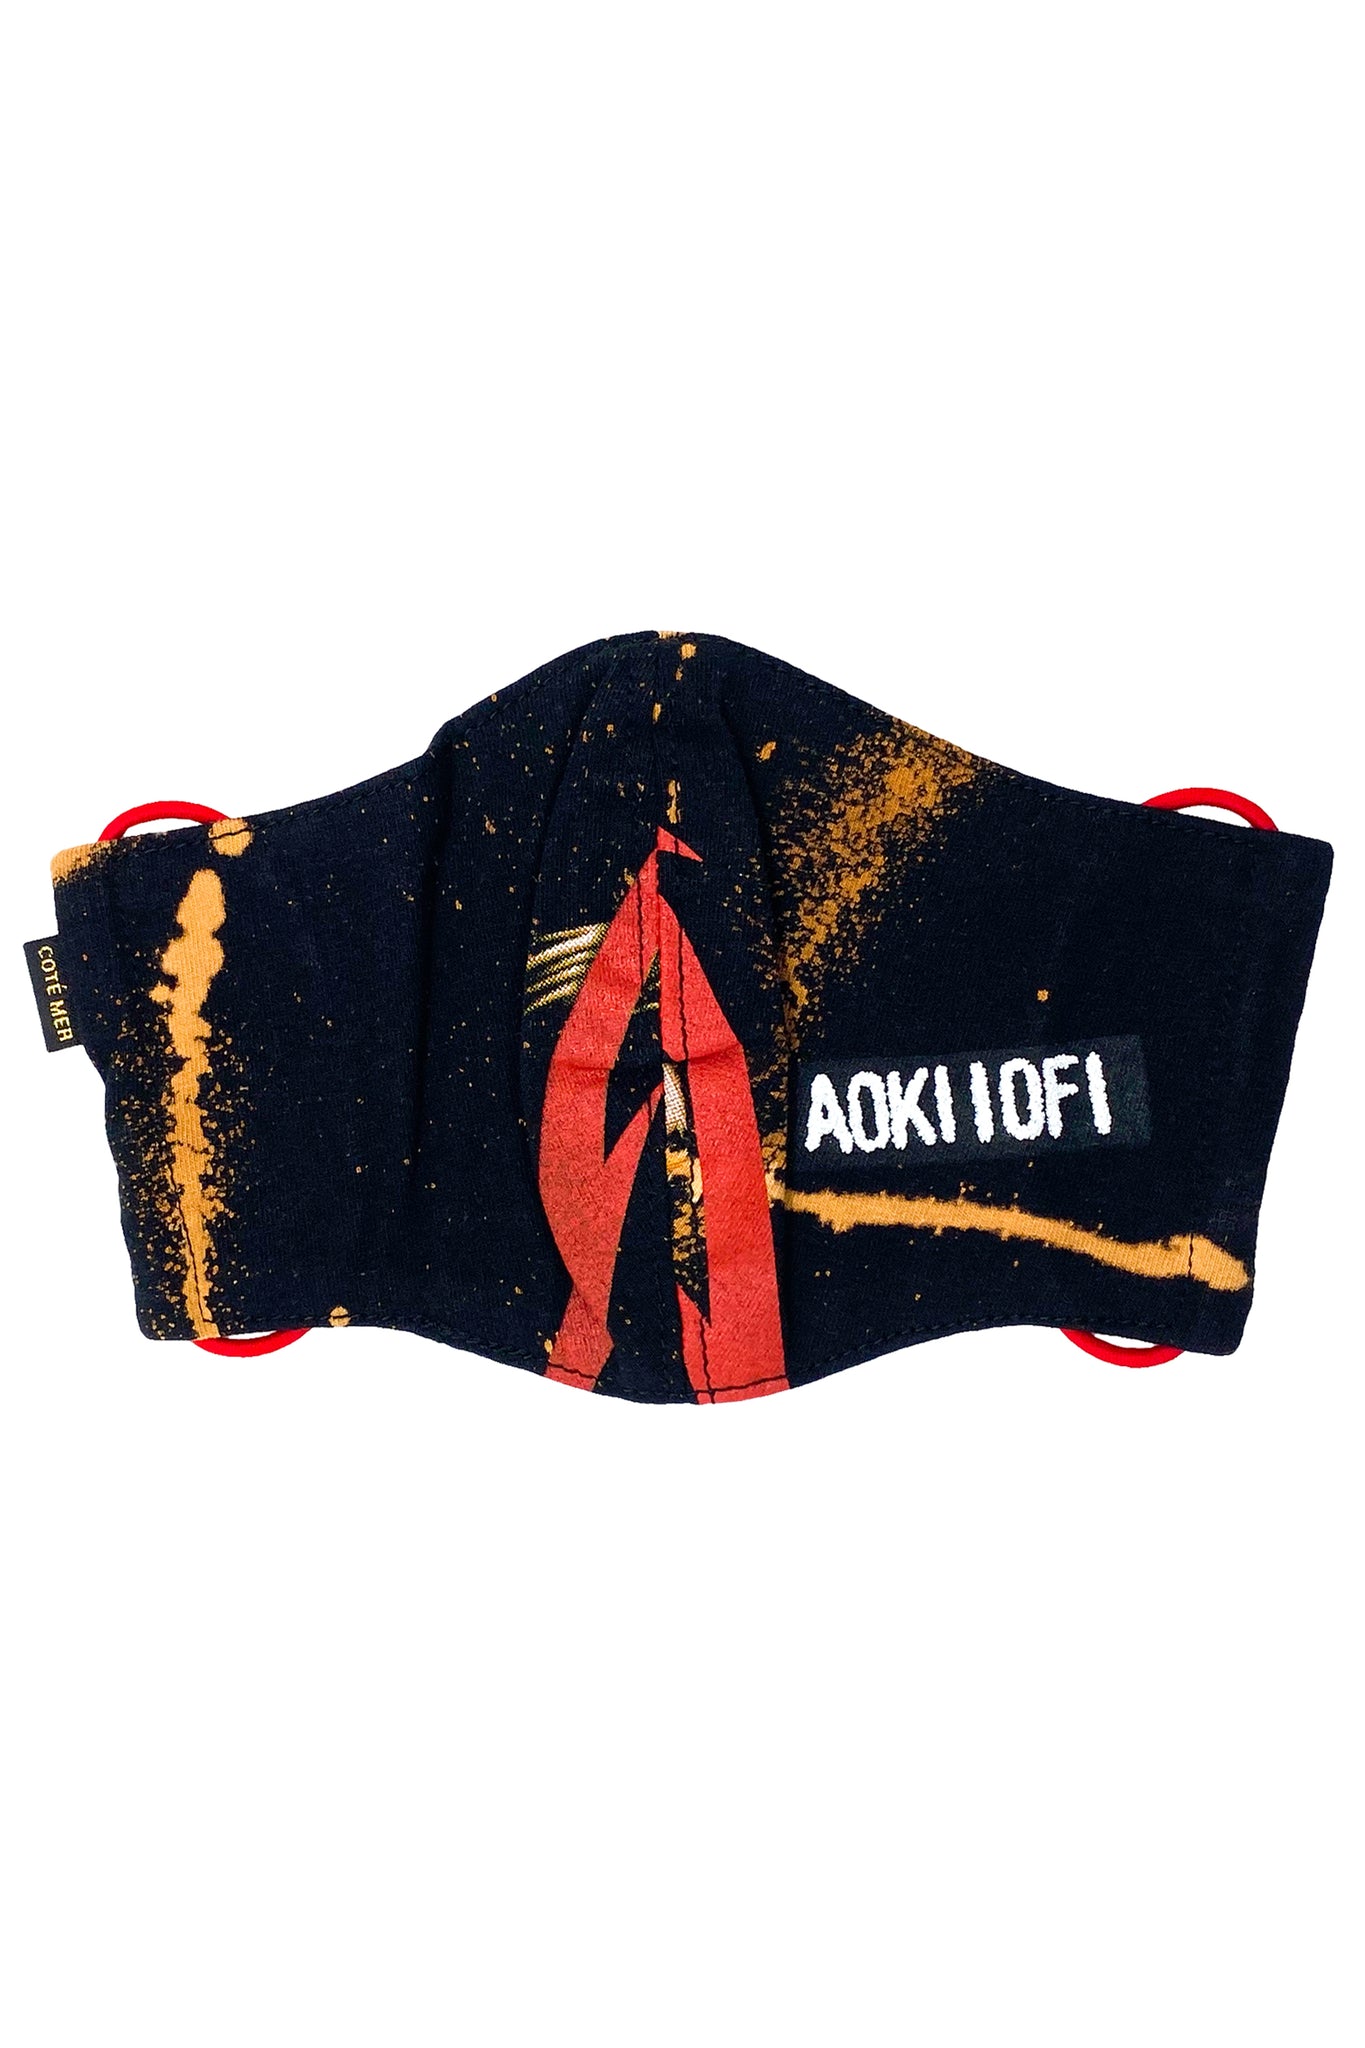 Aoki 1 of 1 Mask #371